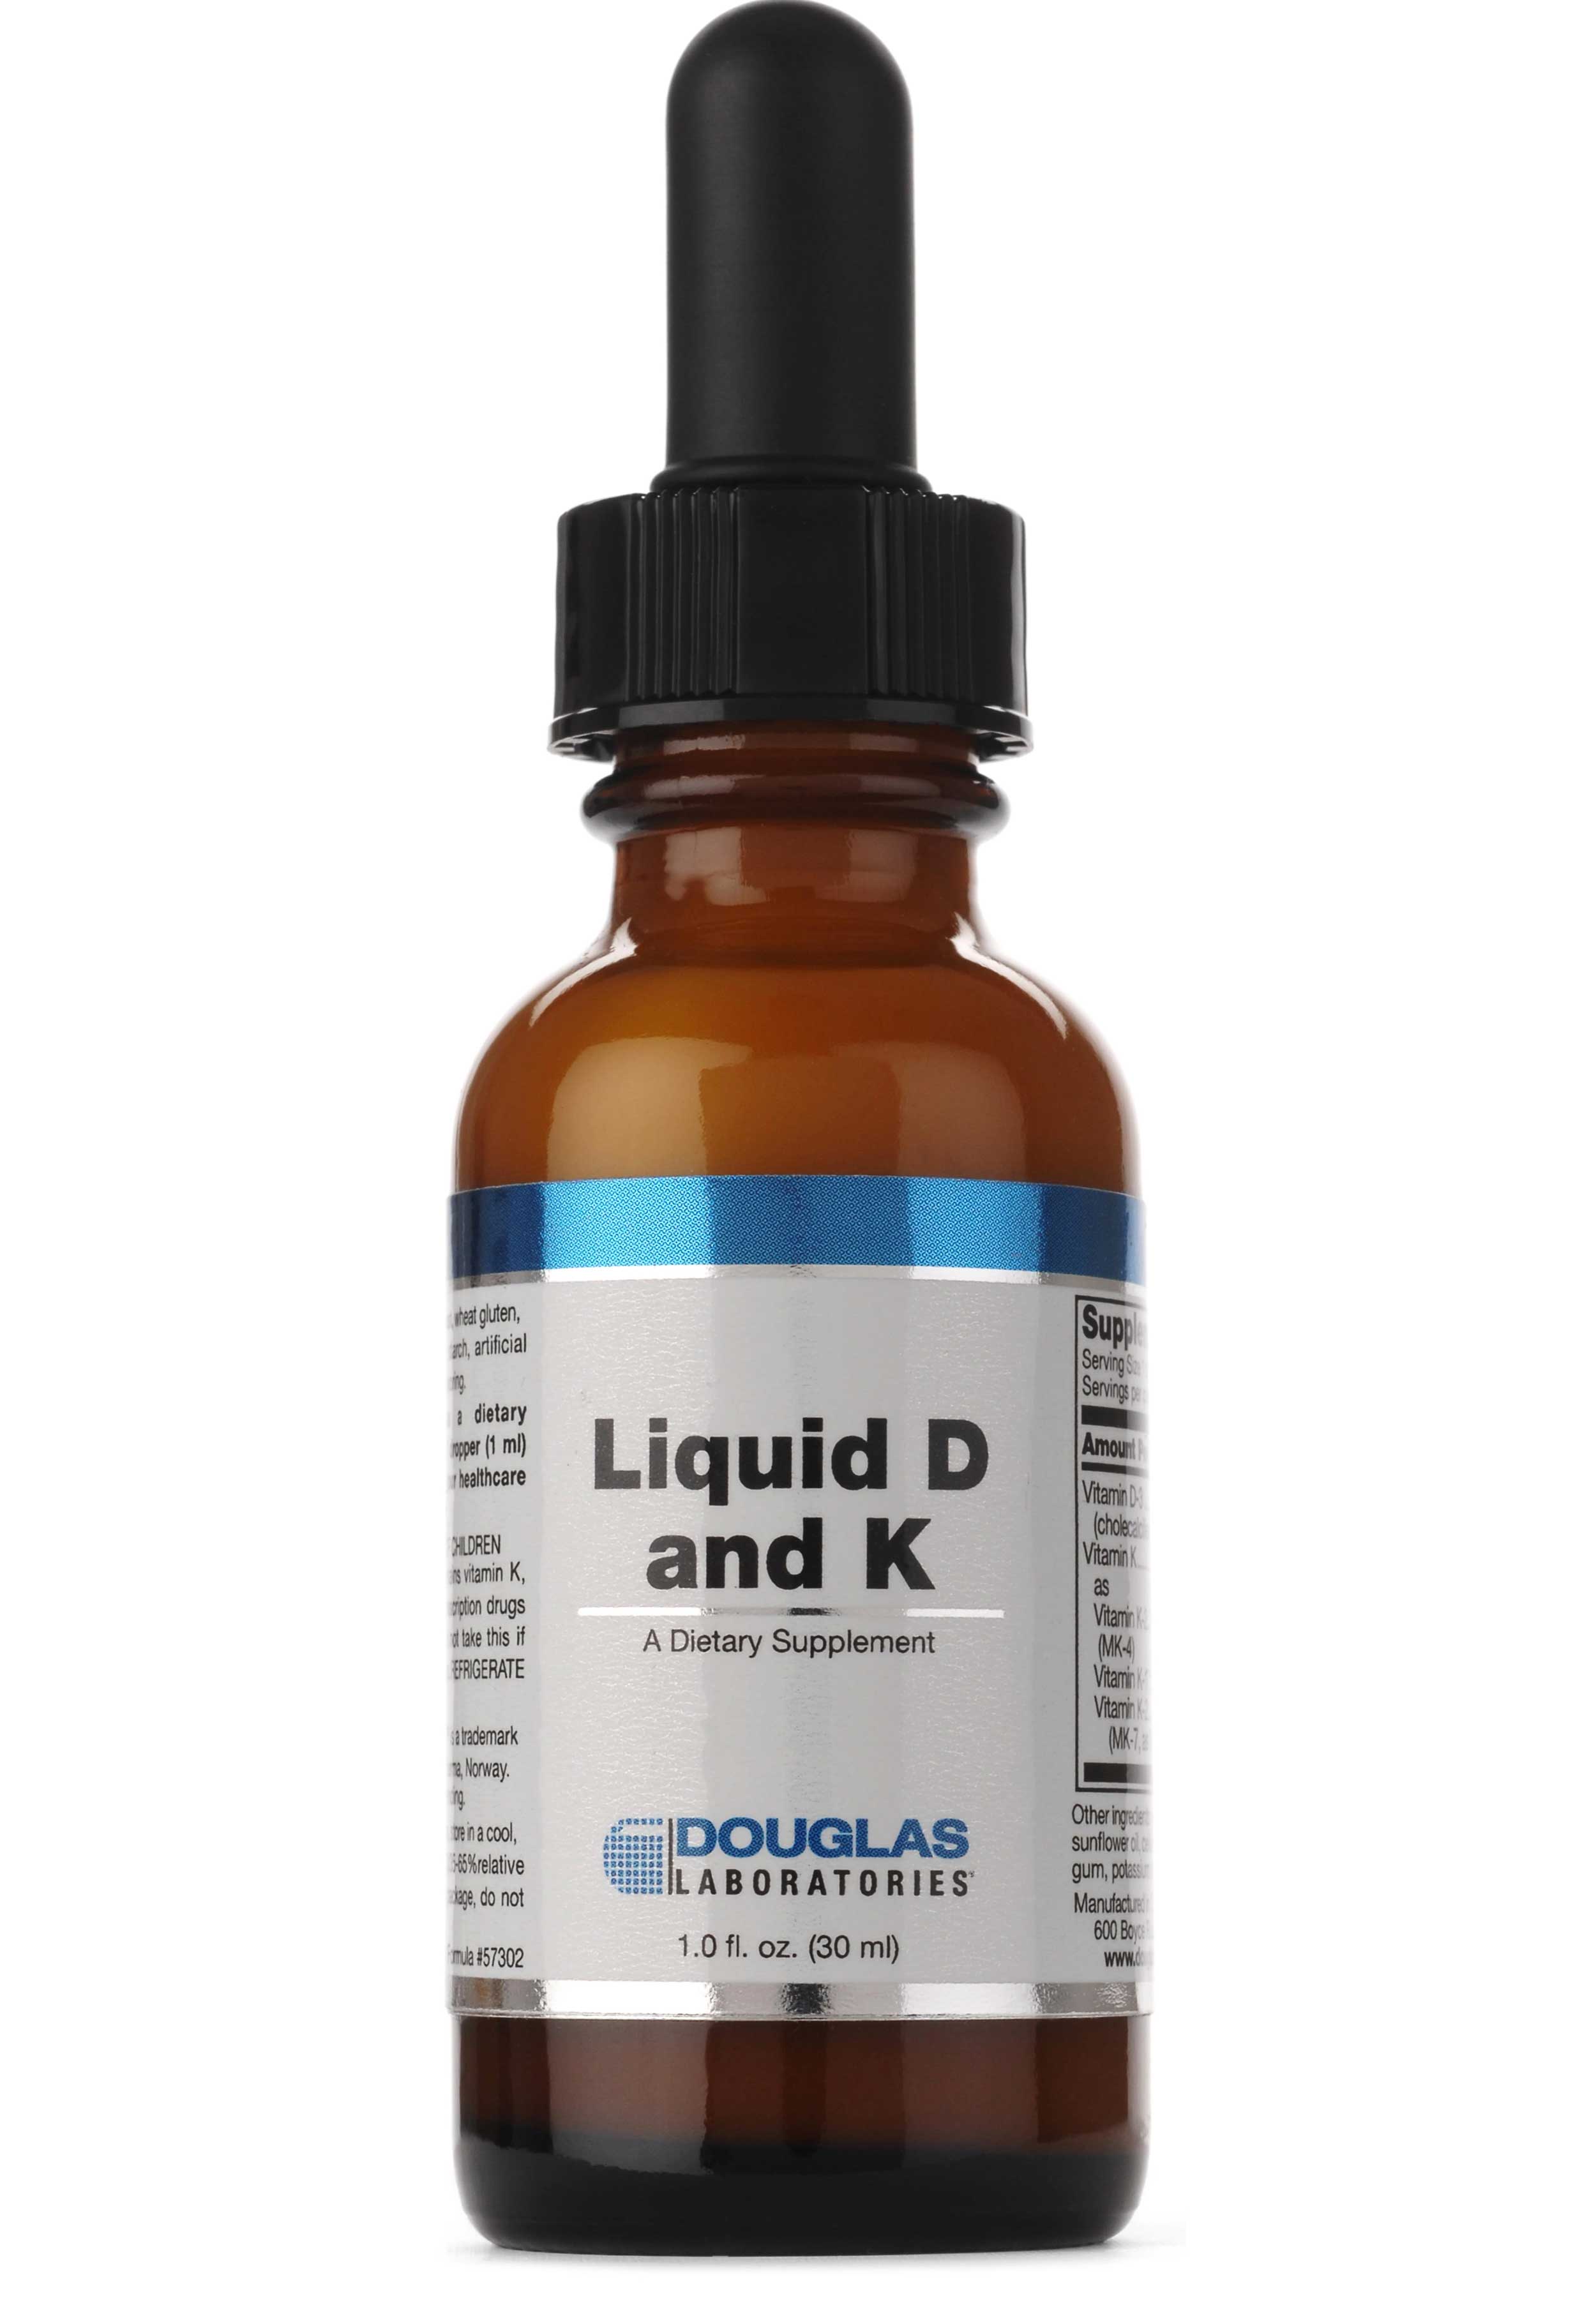 Douglas Laboratories Liquid D and K